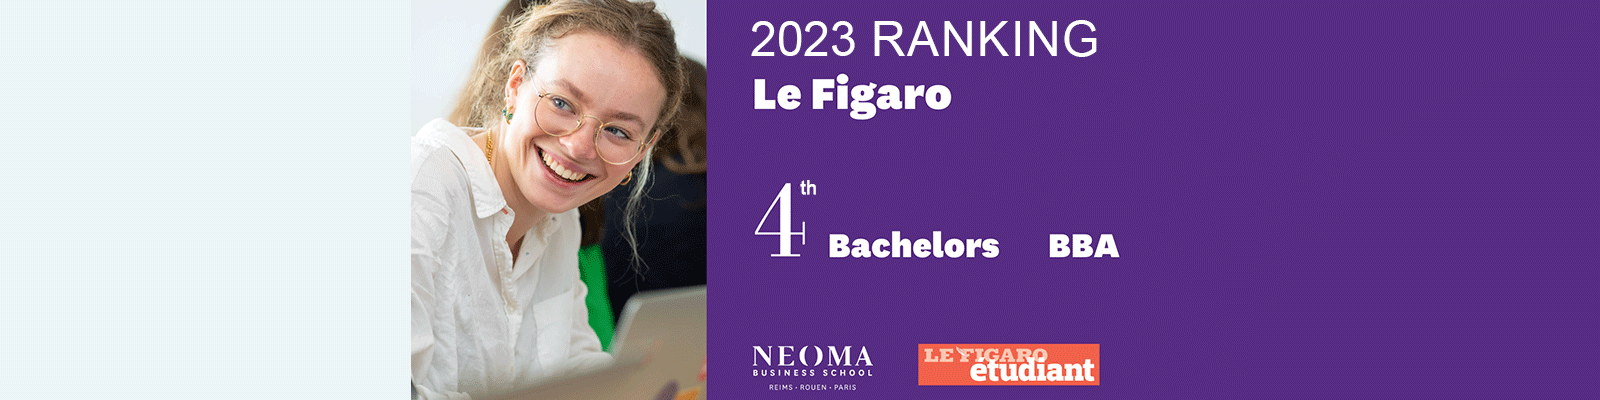 2023 Le Figaro Bachelors and BBAs ranking: NEOMA 4th